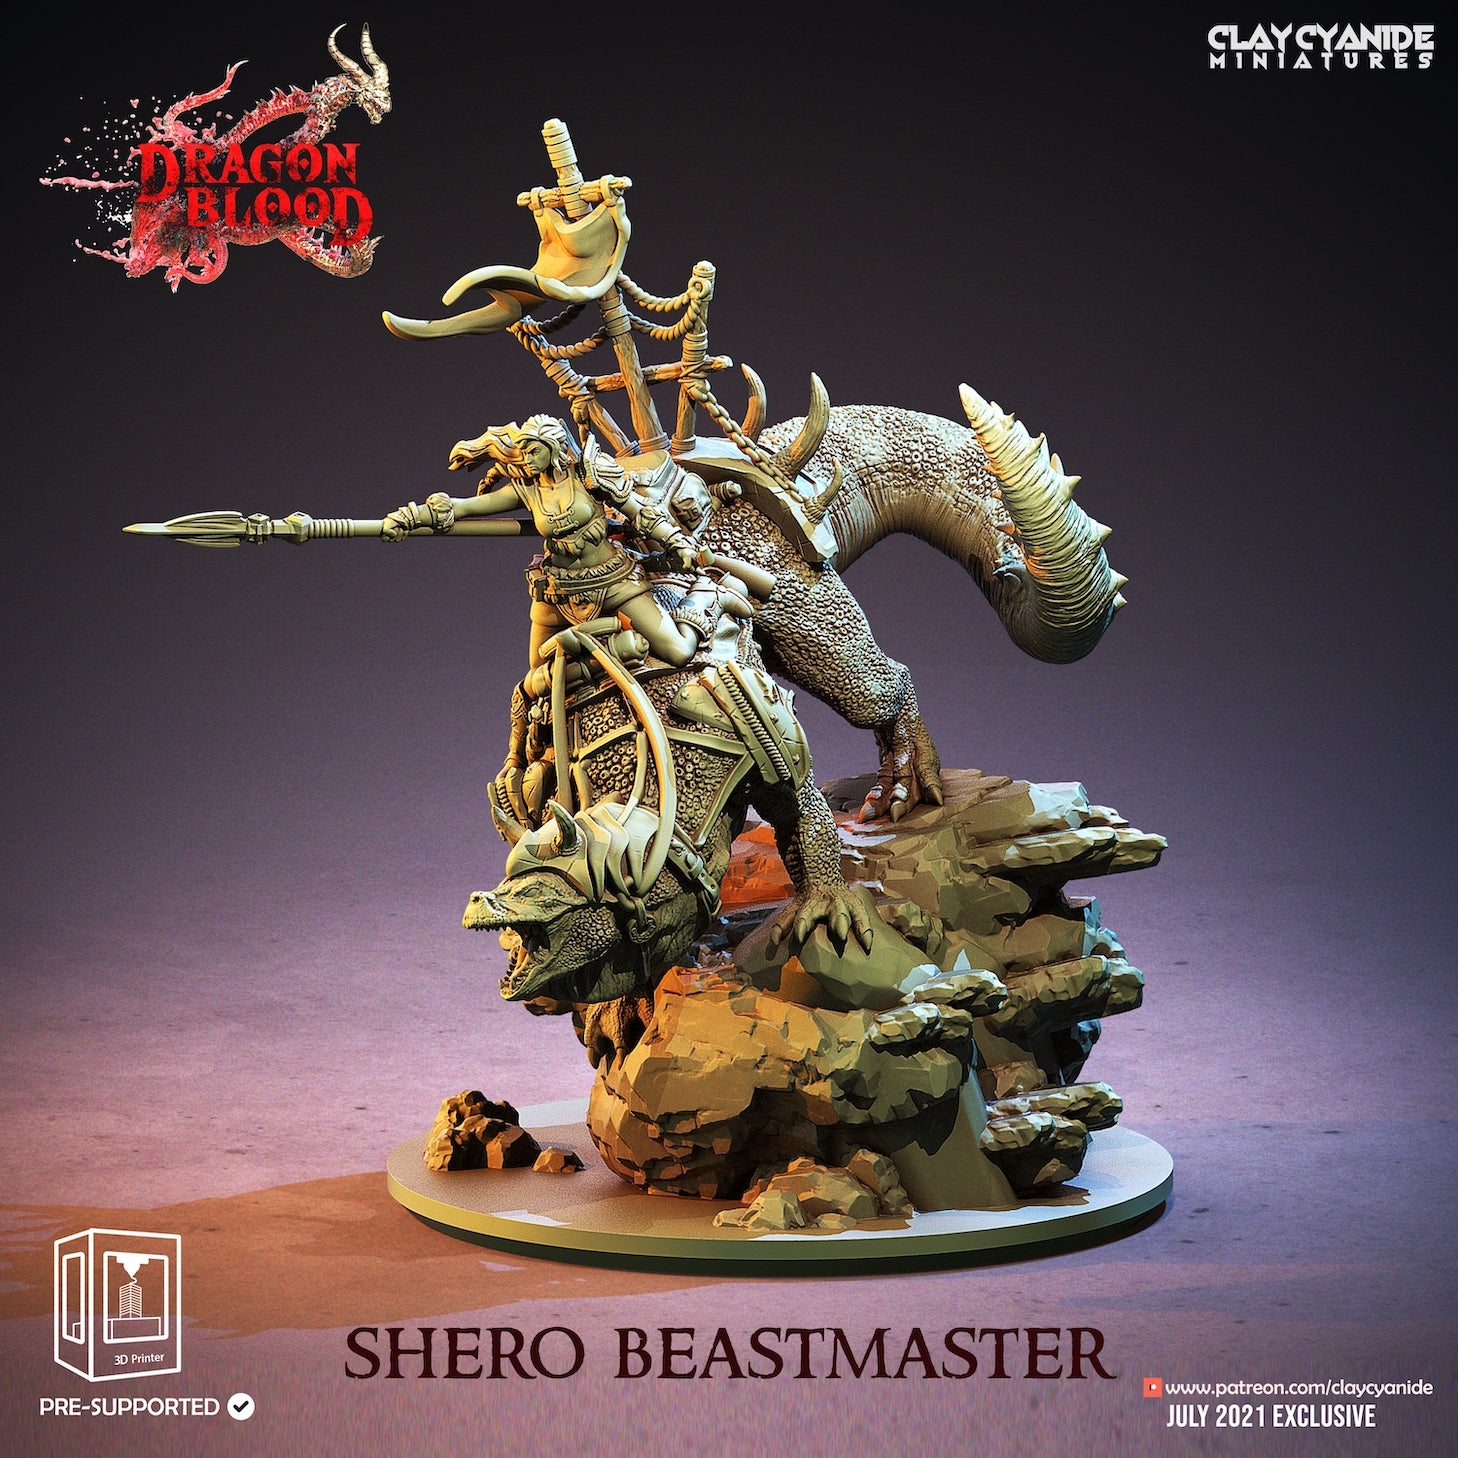 Shero Beastmaster - Drake Rider